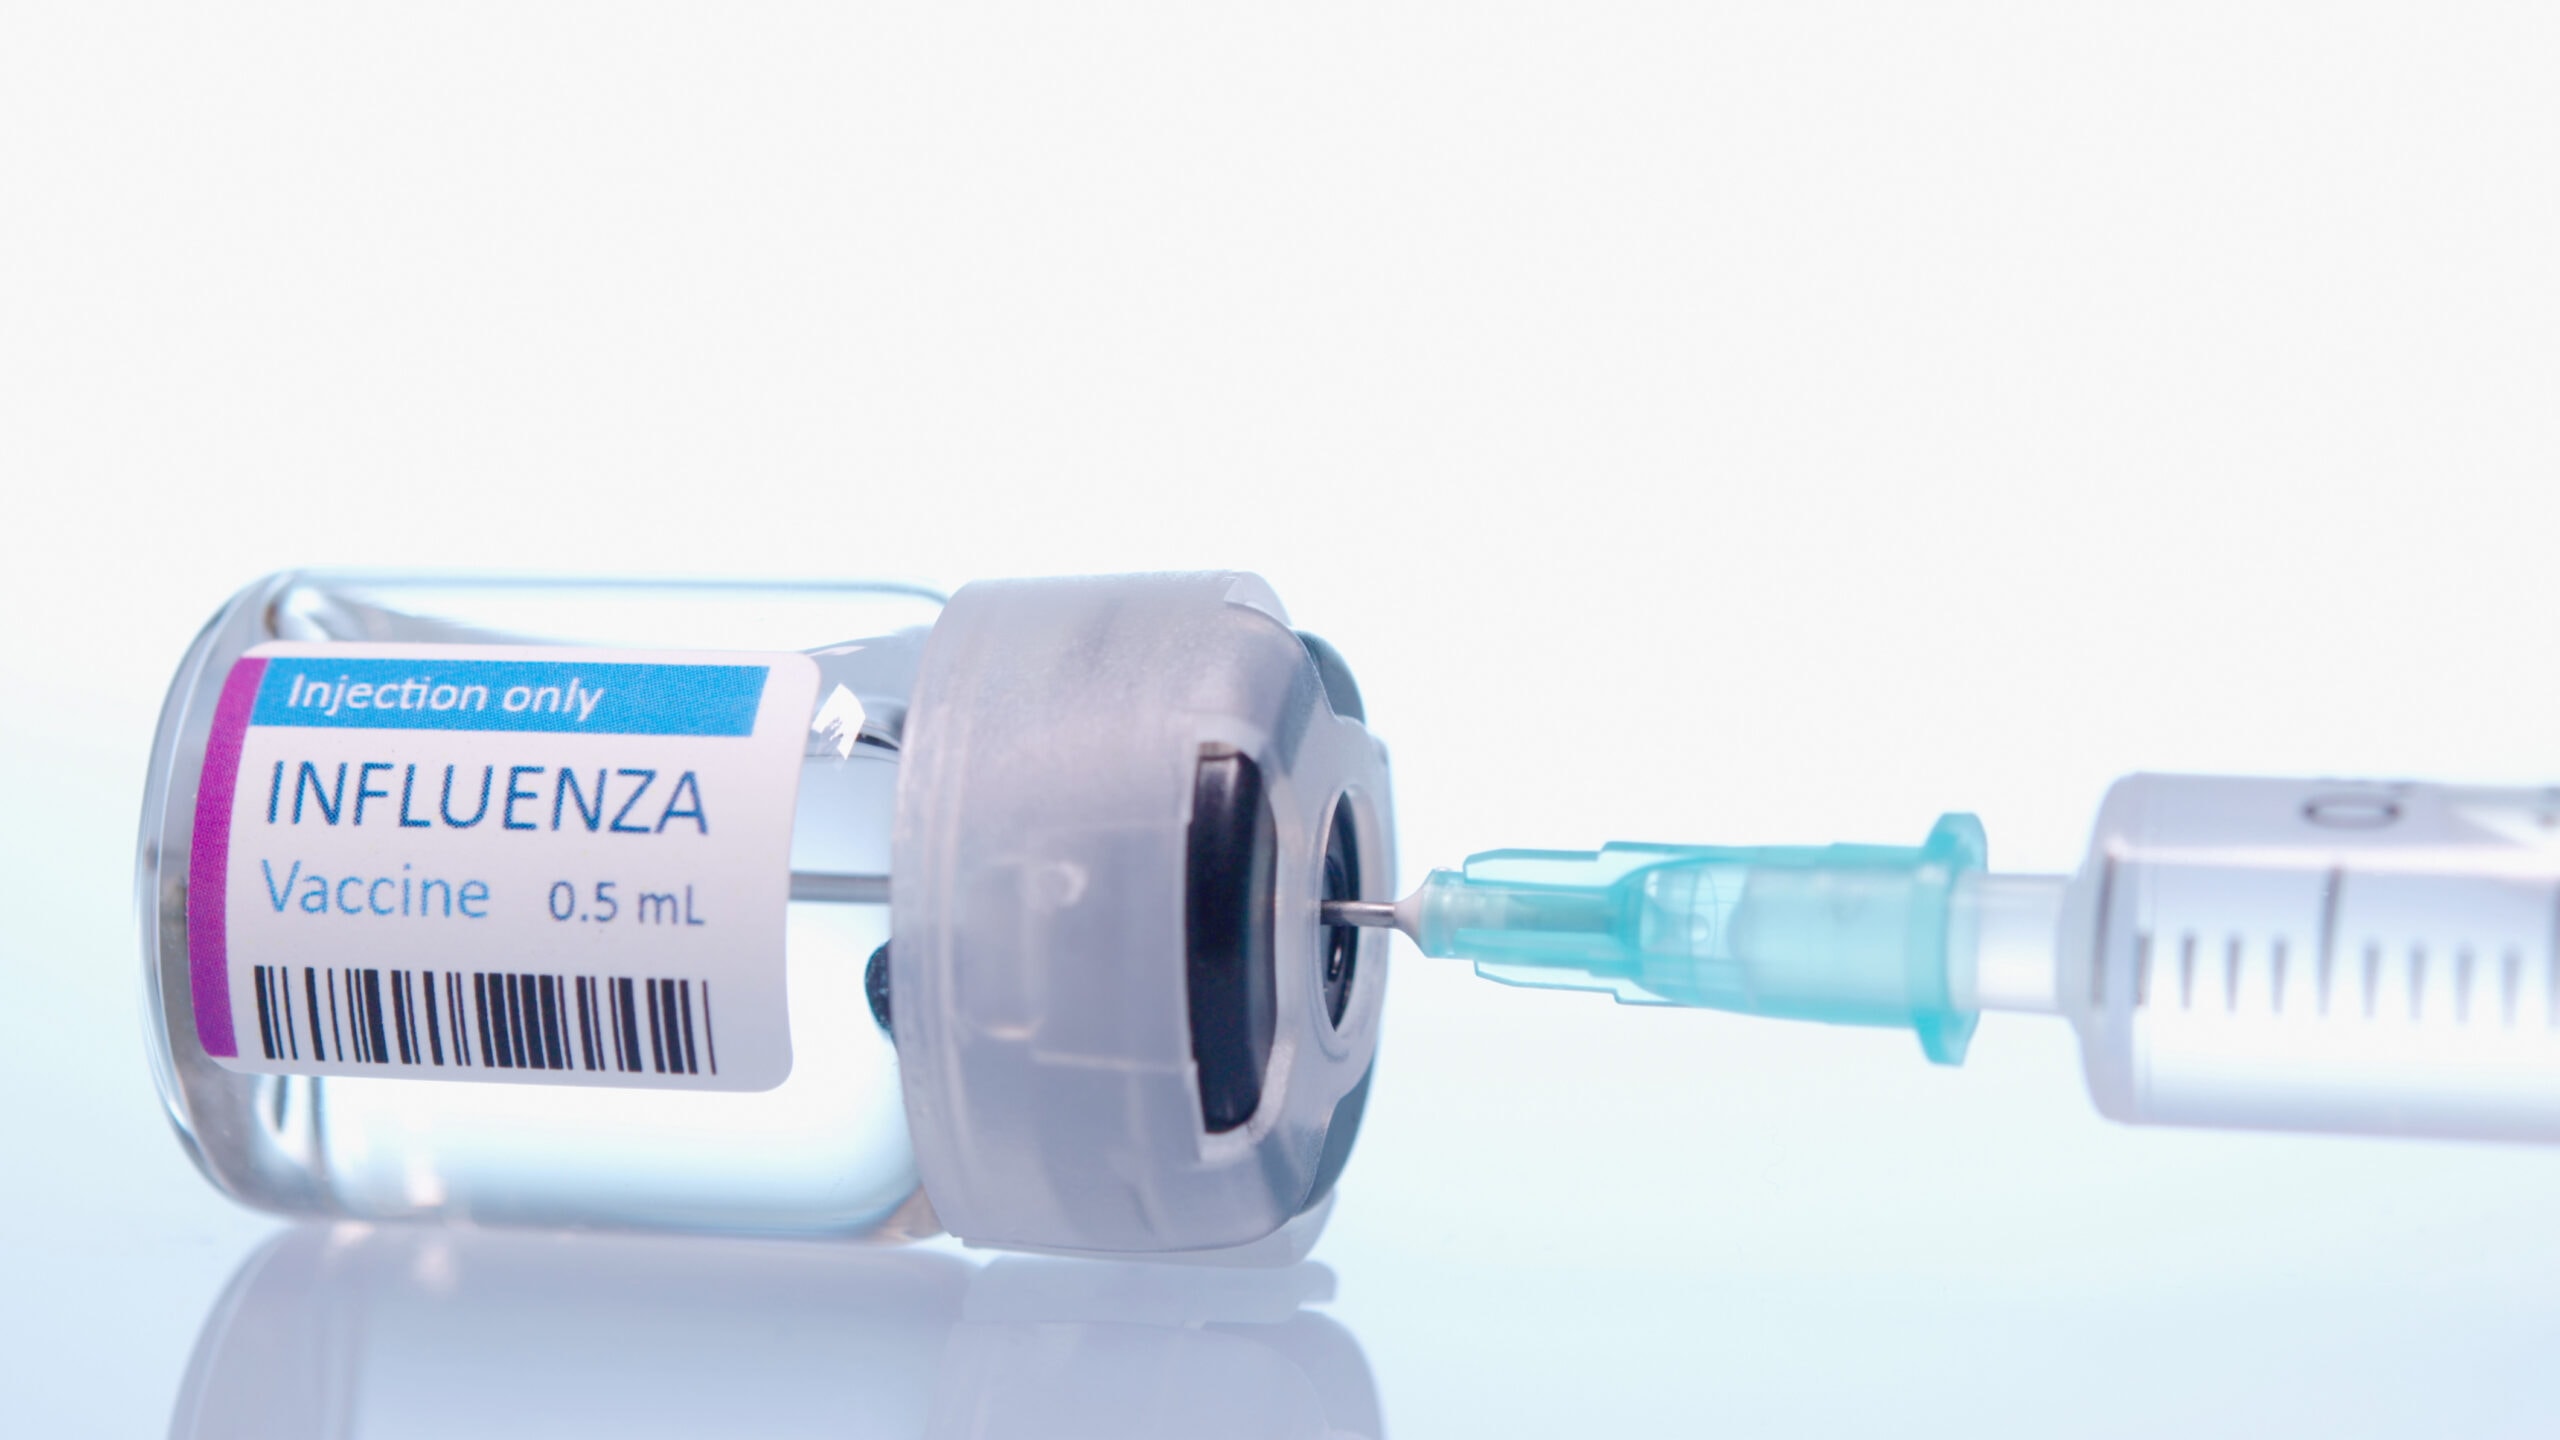 Influenza vaccine vial and syringe